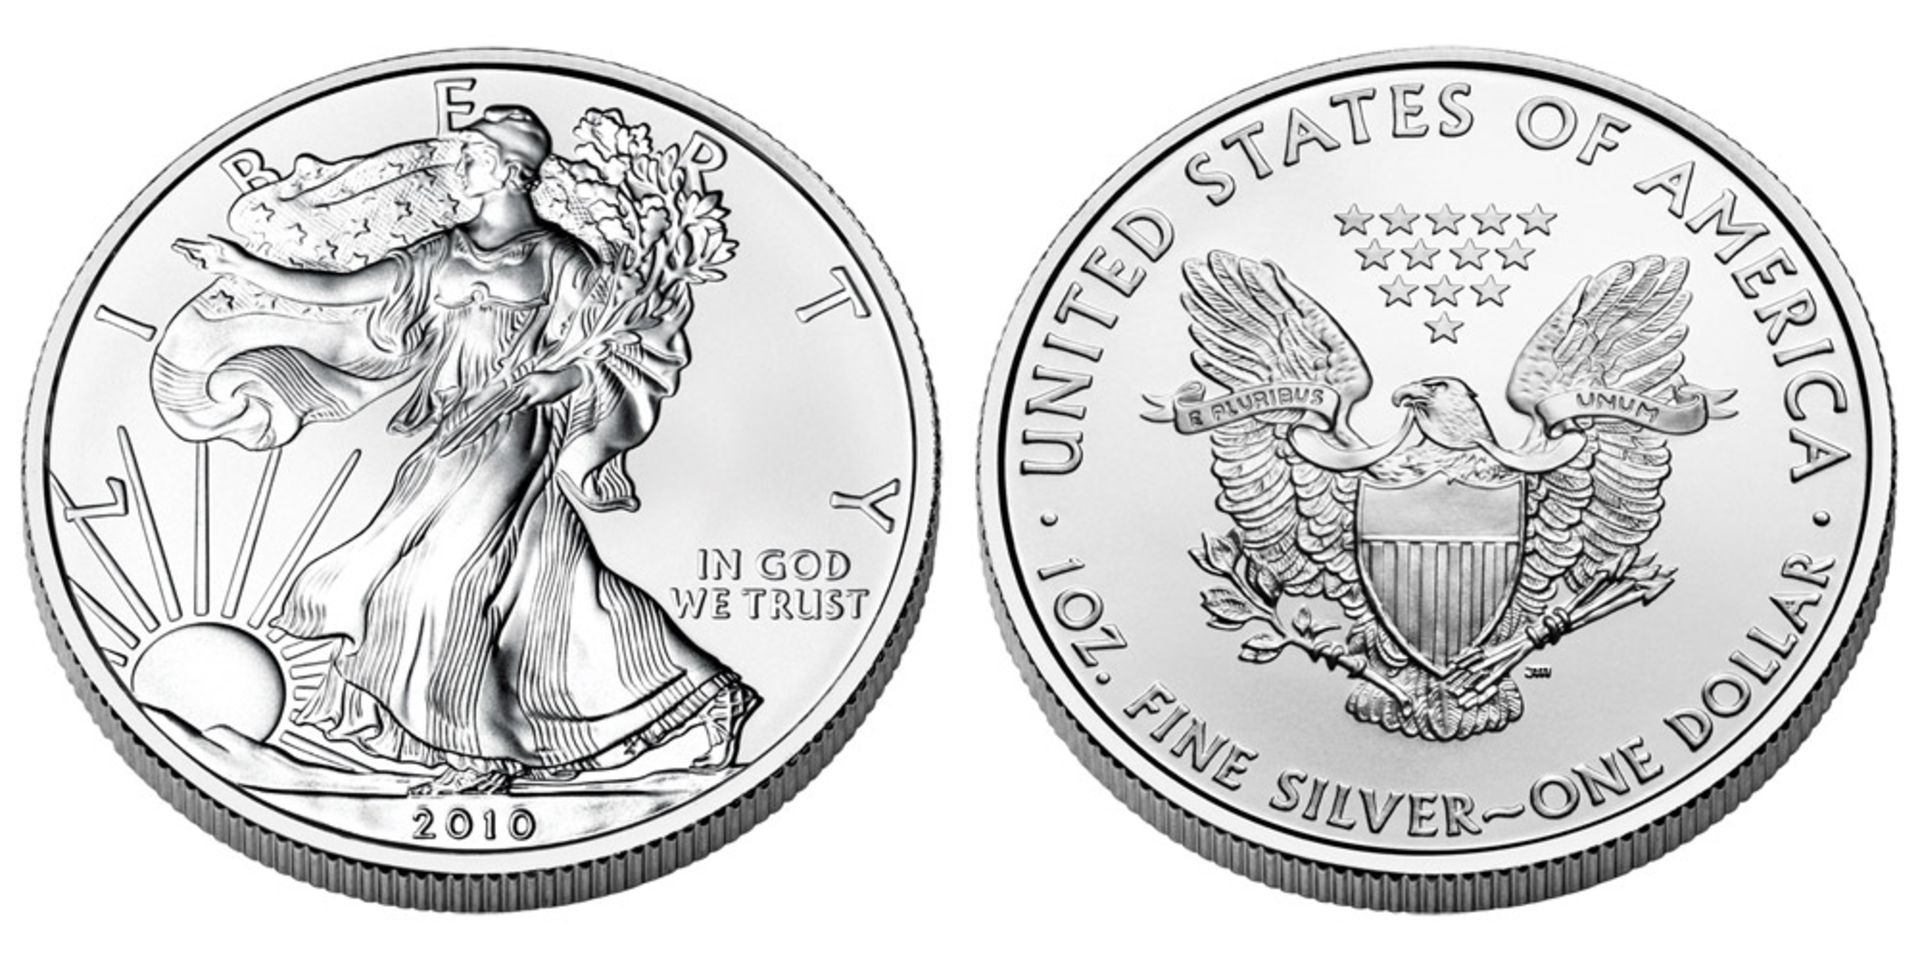 2010 American Silver Eagle .999 Fine Silver Dollar Coin - Image 2 of 2